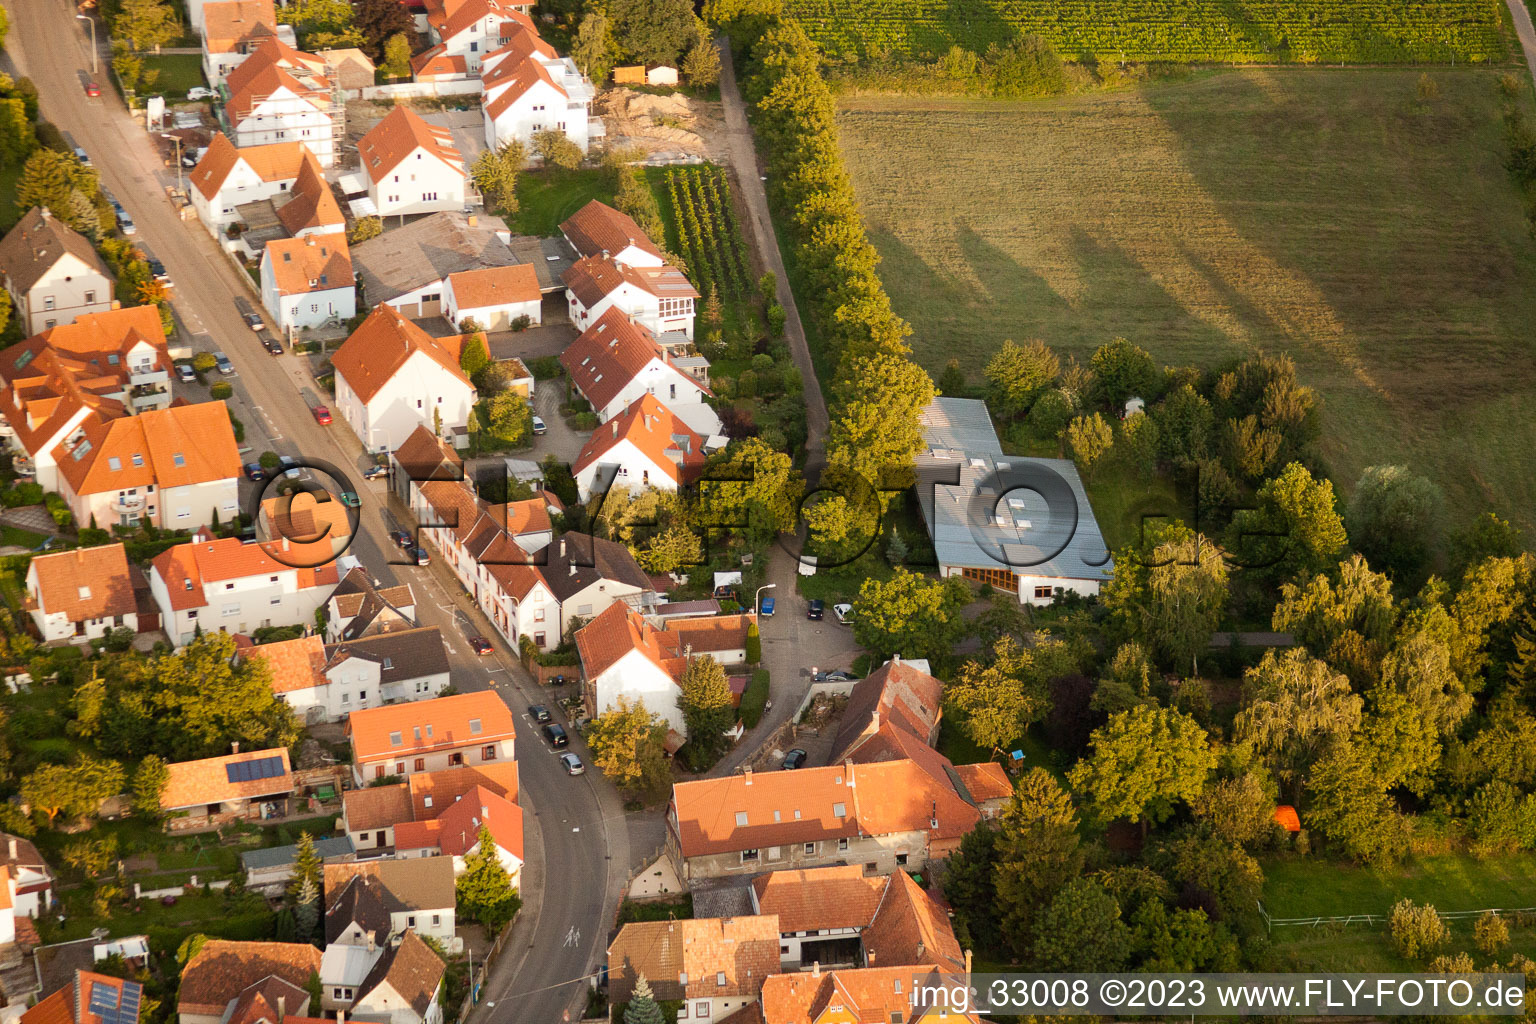 Drone image of District Godramstein in Landau in der Pfalz in the state Rhineland-Palatinate, Germany